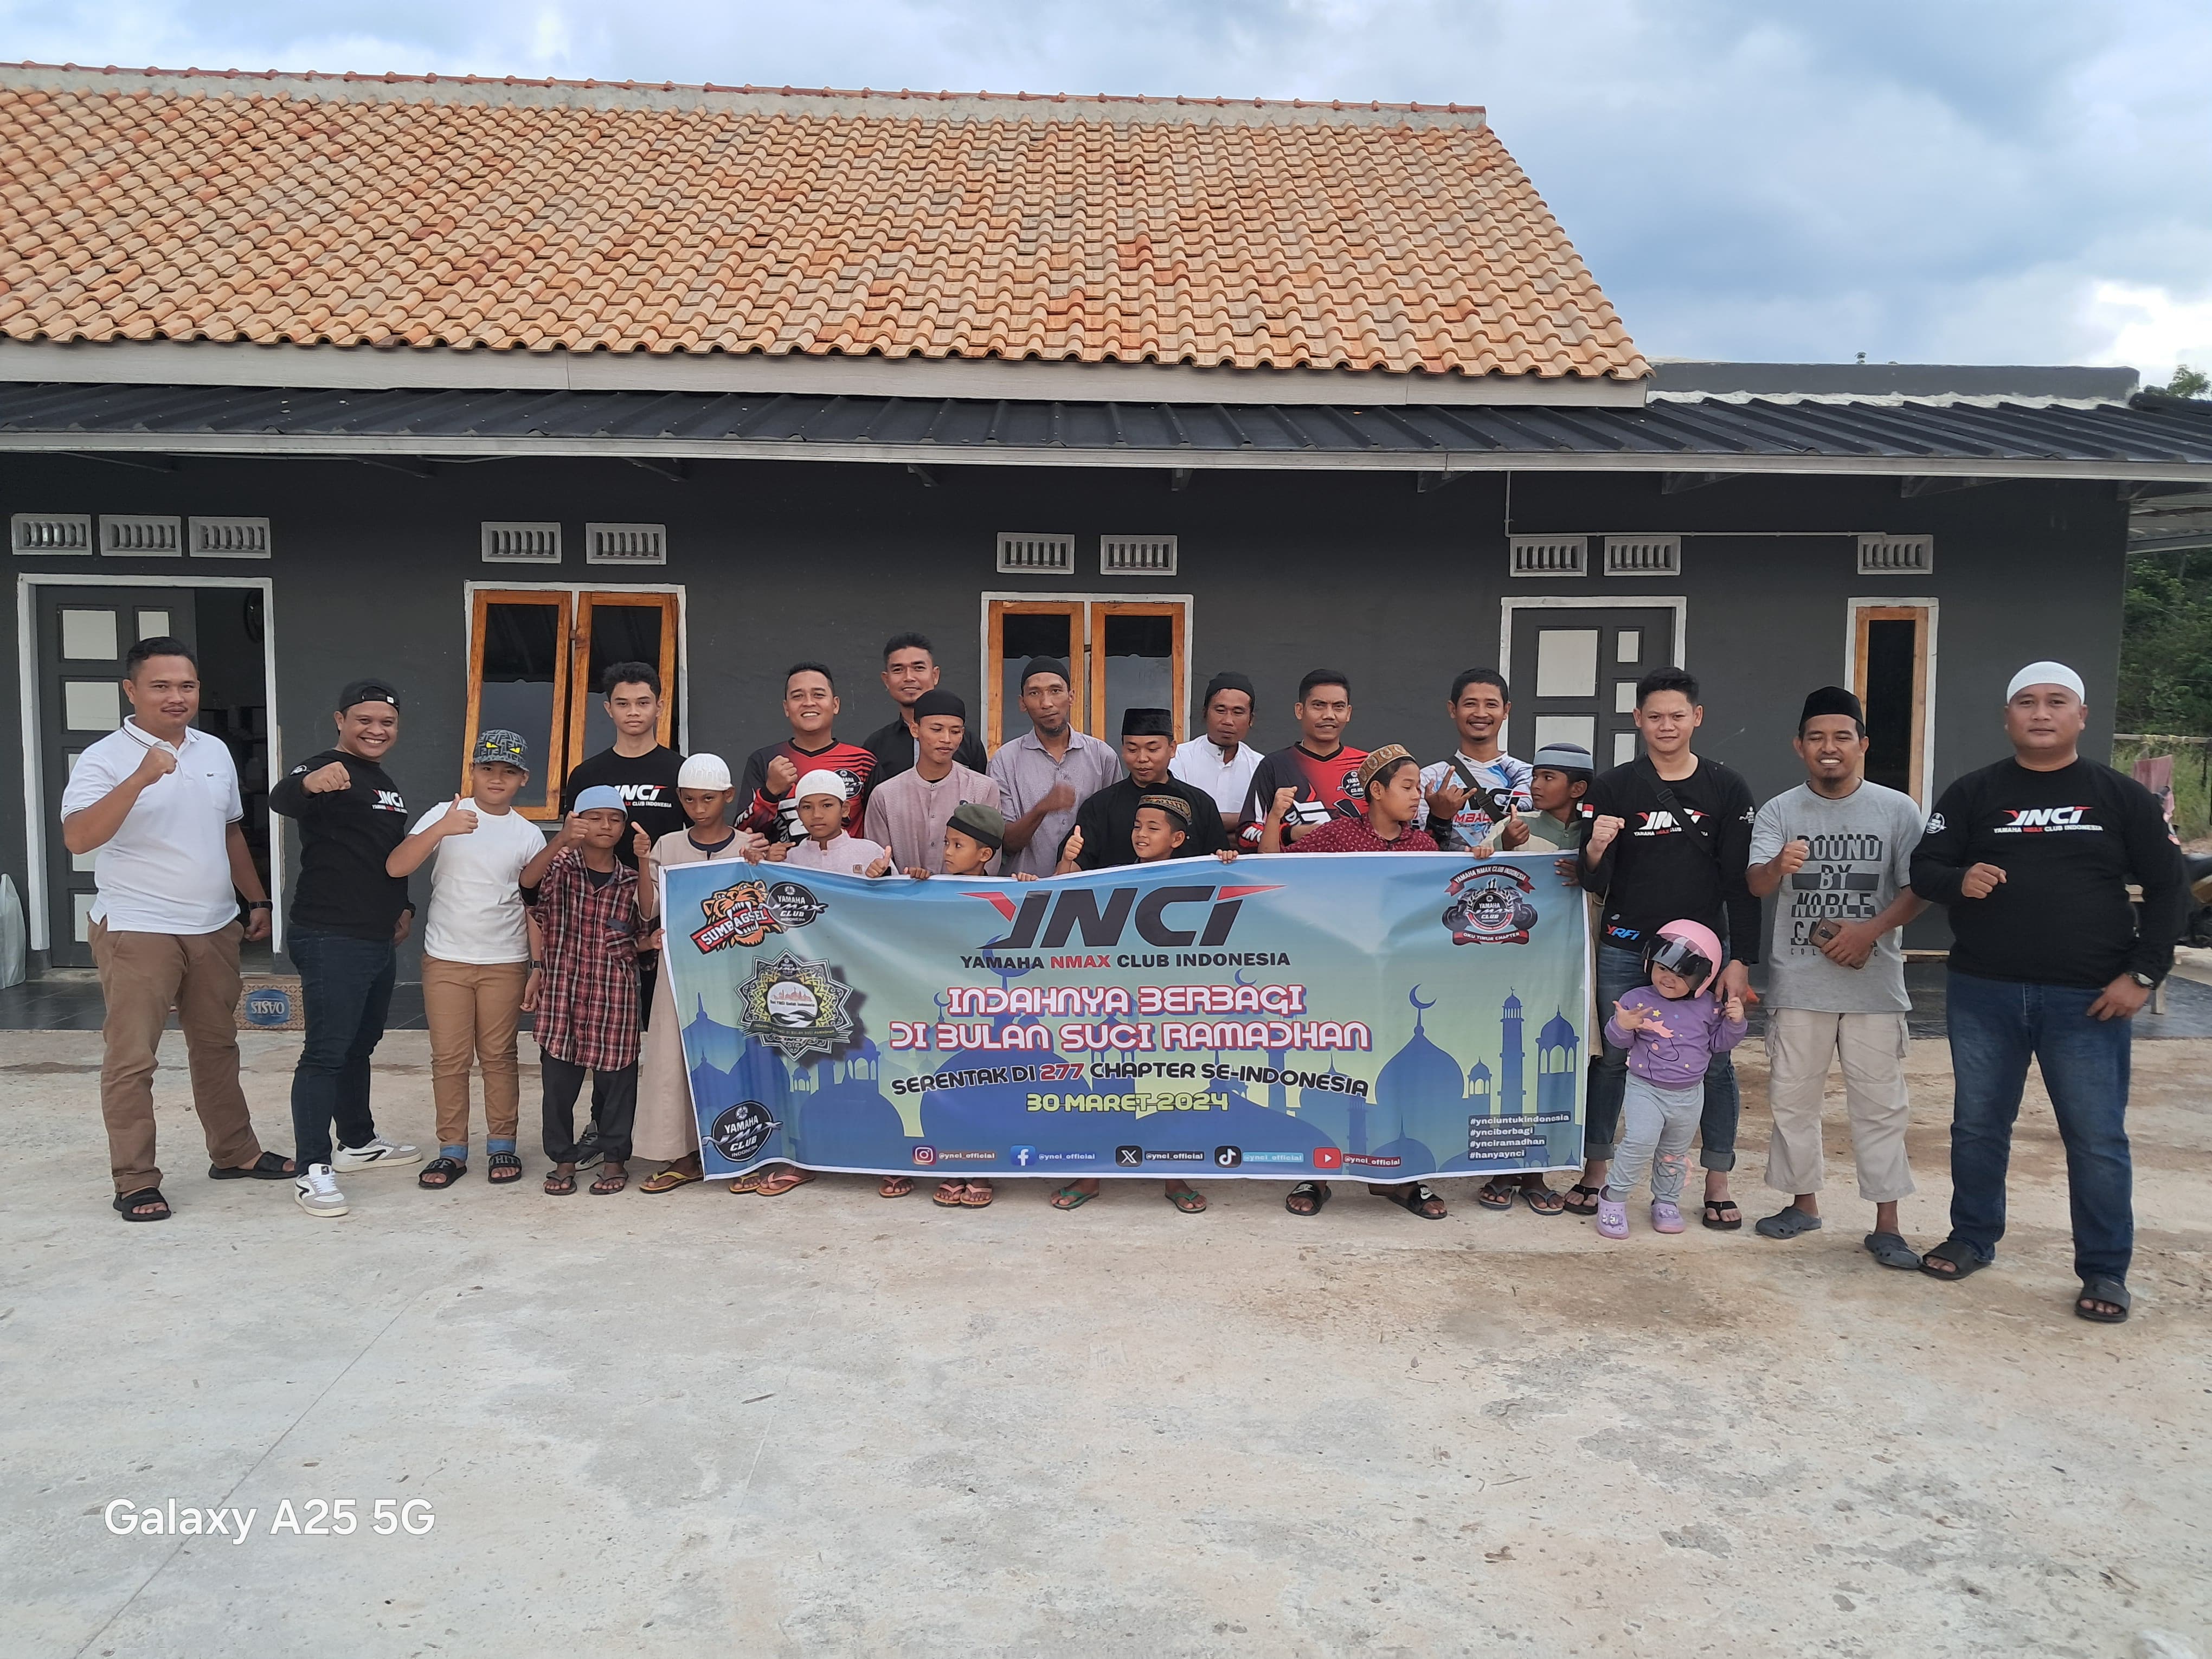 Yamaha Nmax Club Indonesia Chapter OKU Timur Bagi Takjil Hingga Bukber dengan Anak Yatim